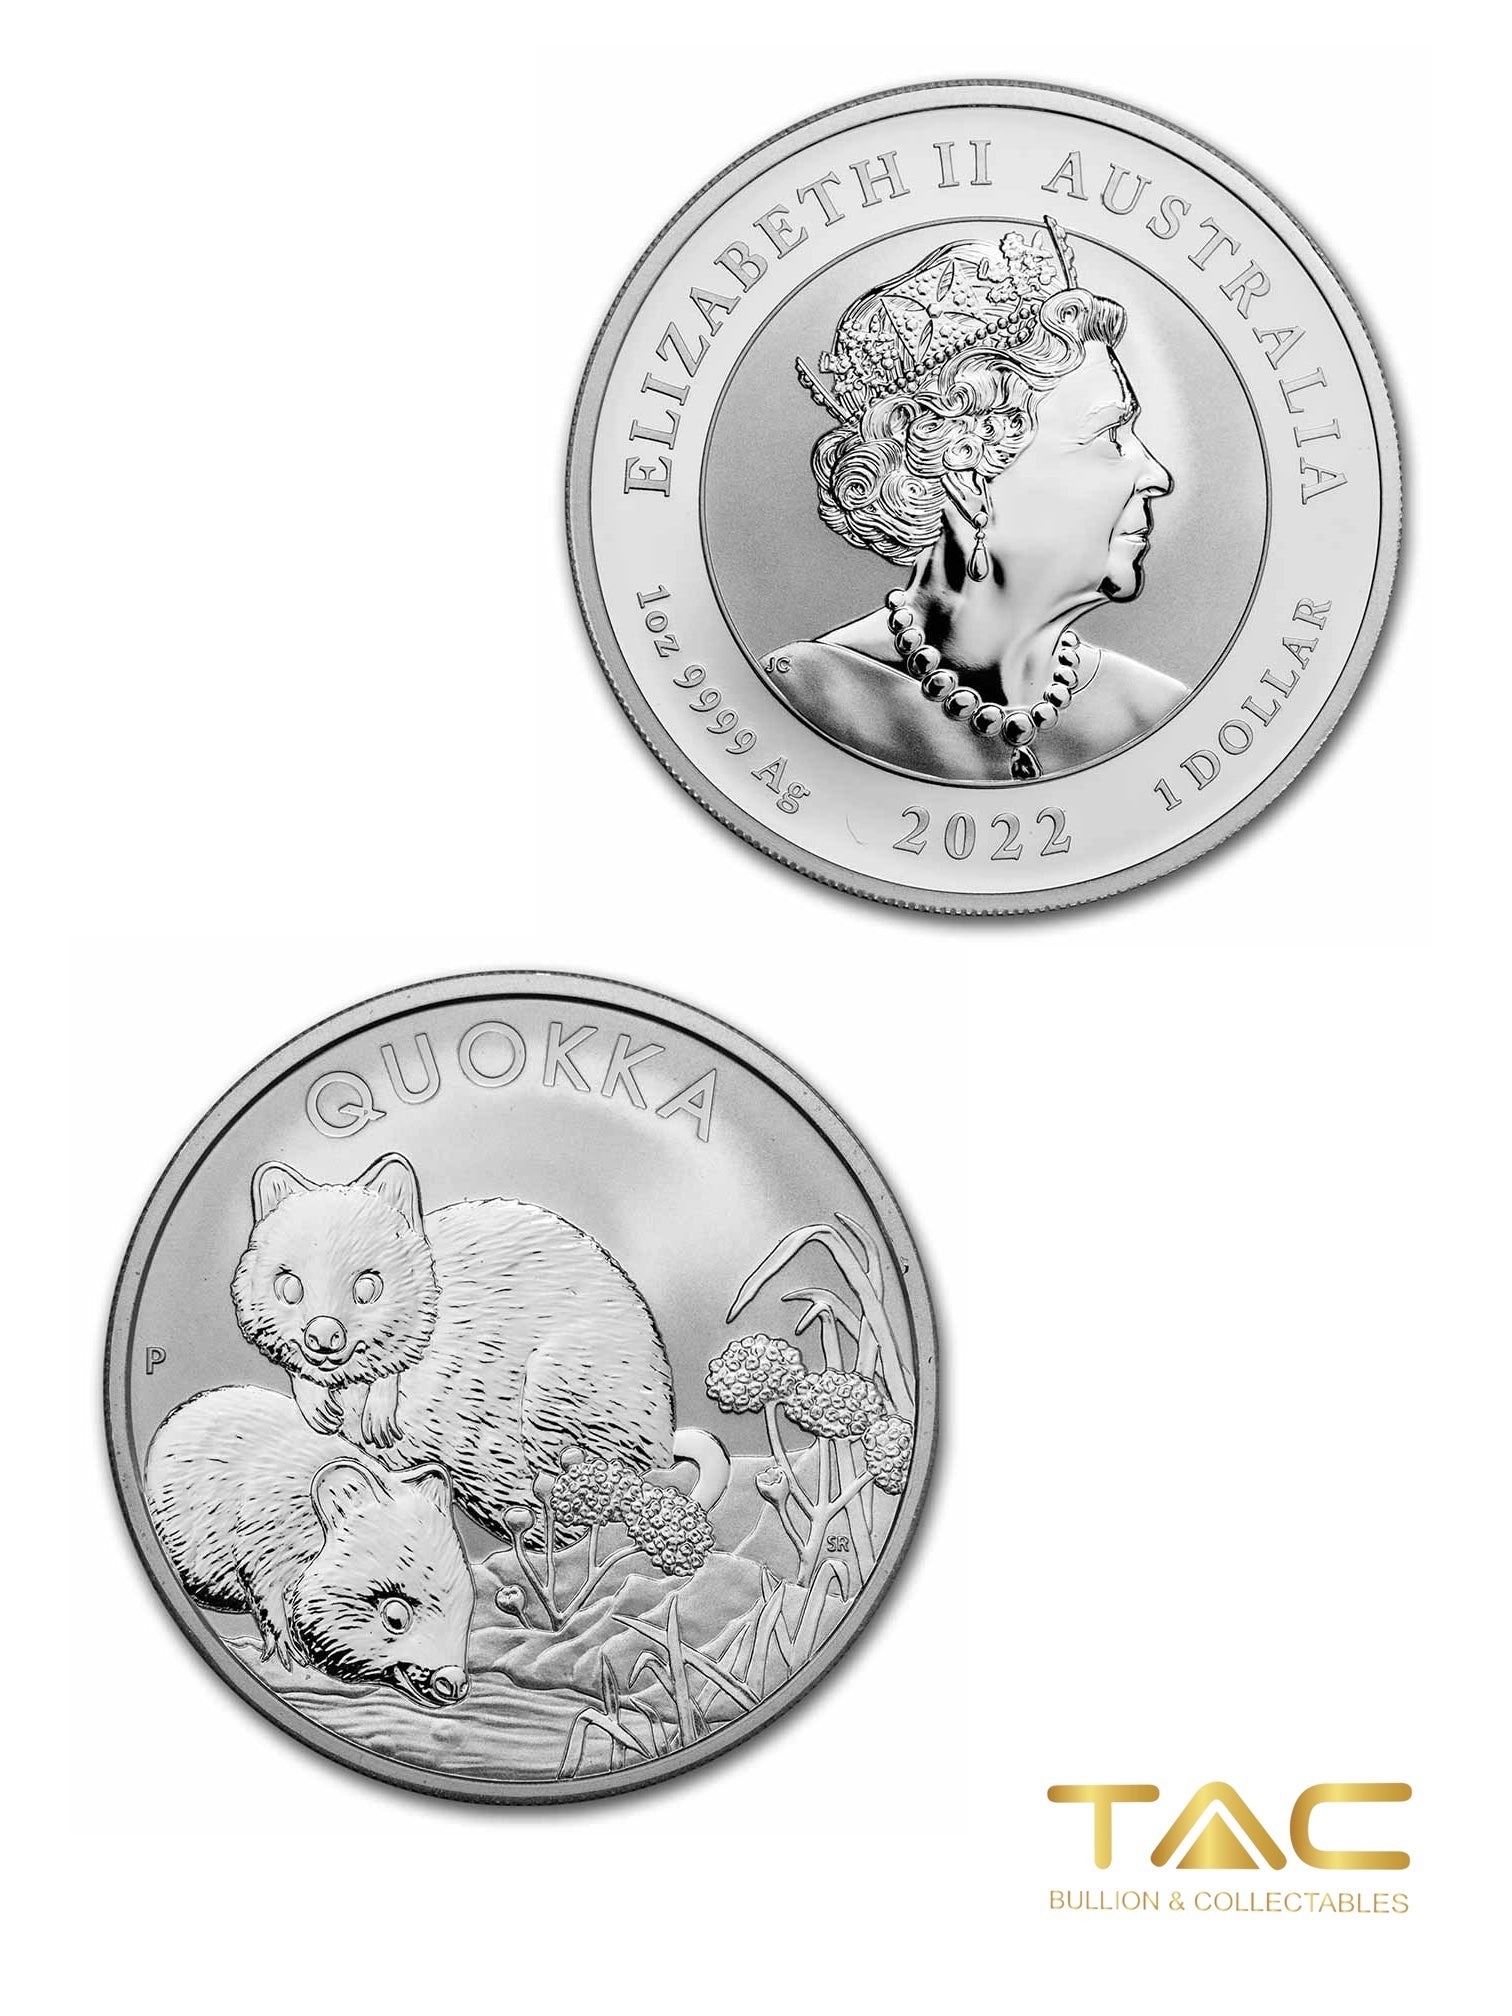 1 oz Silver Coin - 2022 Australian Quokka - Perth Mint